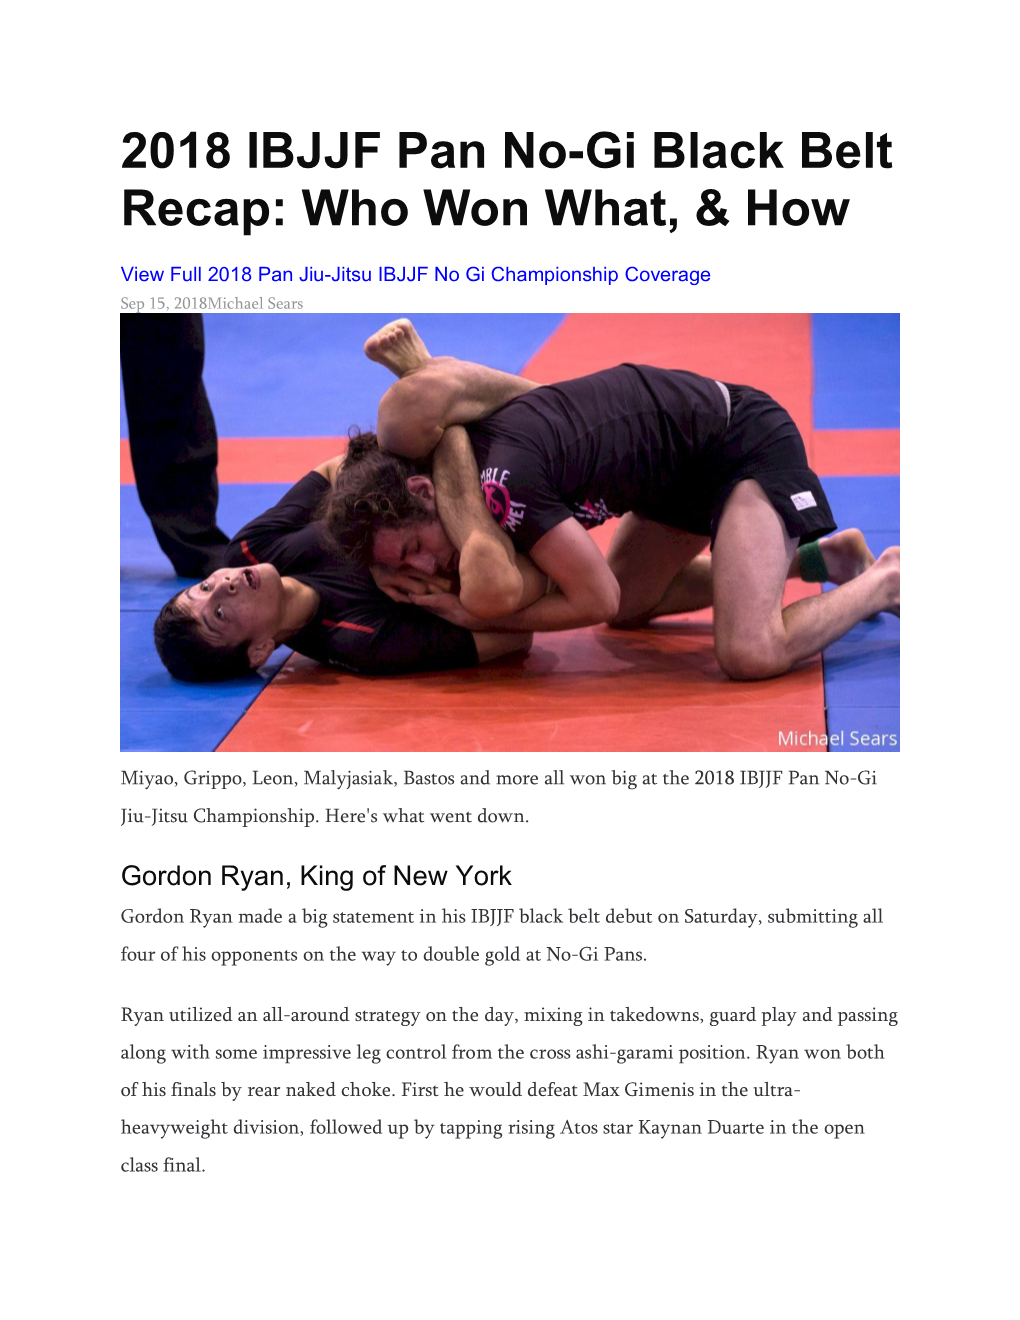 2018 IBJJF Pan No-Gi Black Belt Recap: Who Won What, & How